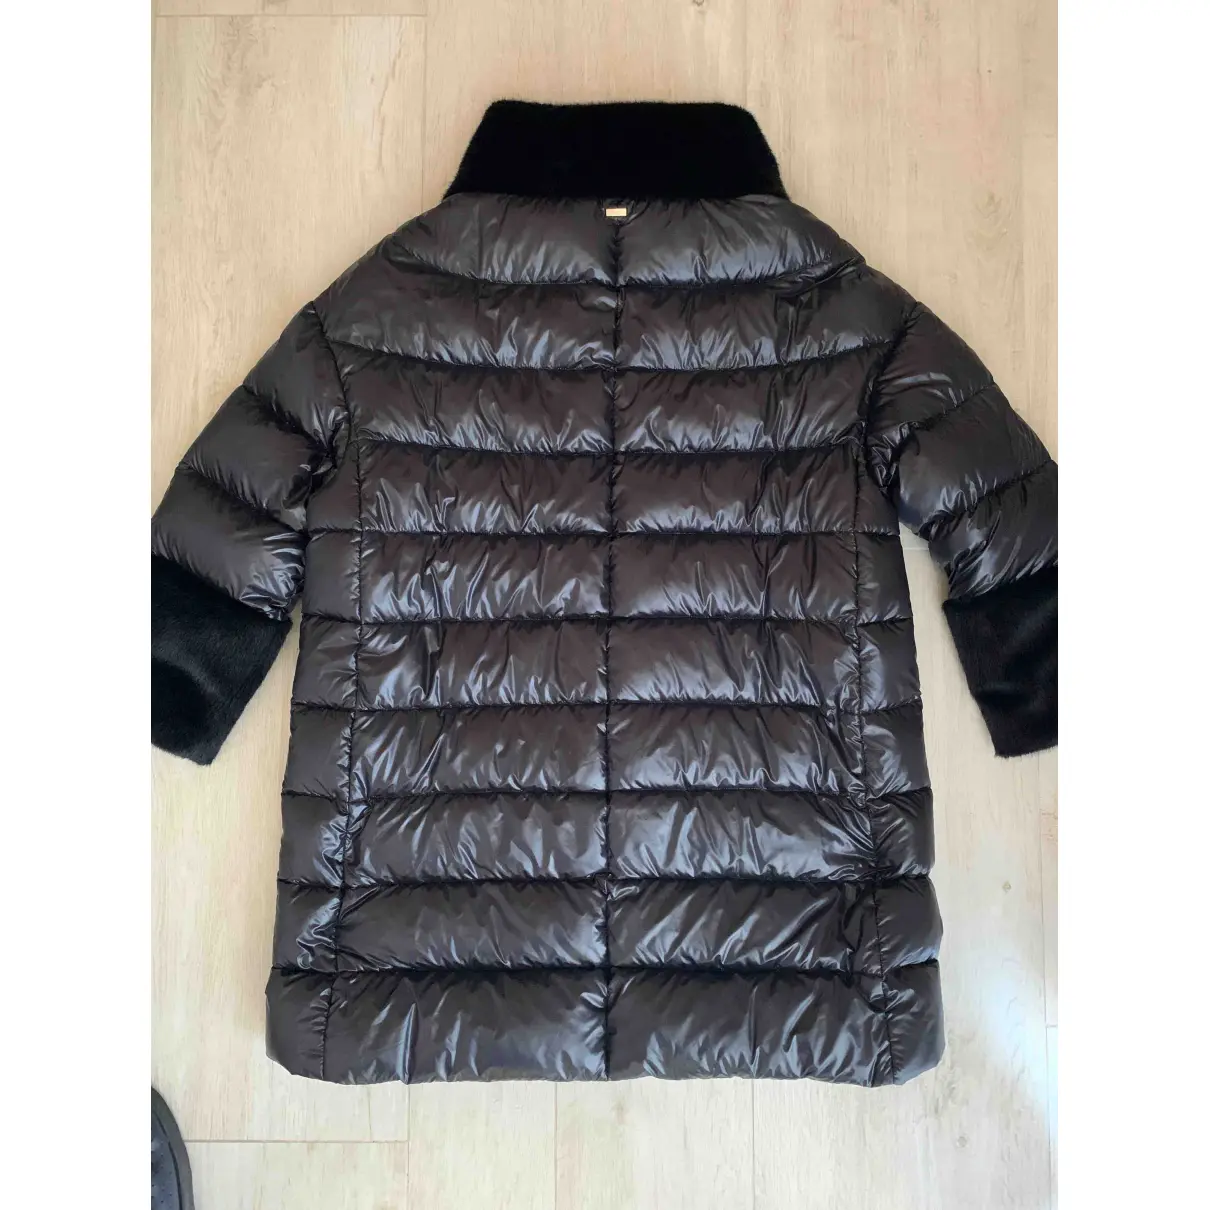 Buy Herno Black Polyester Jacket online